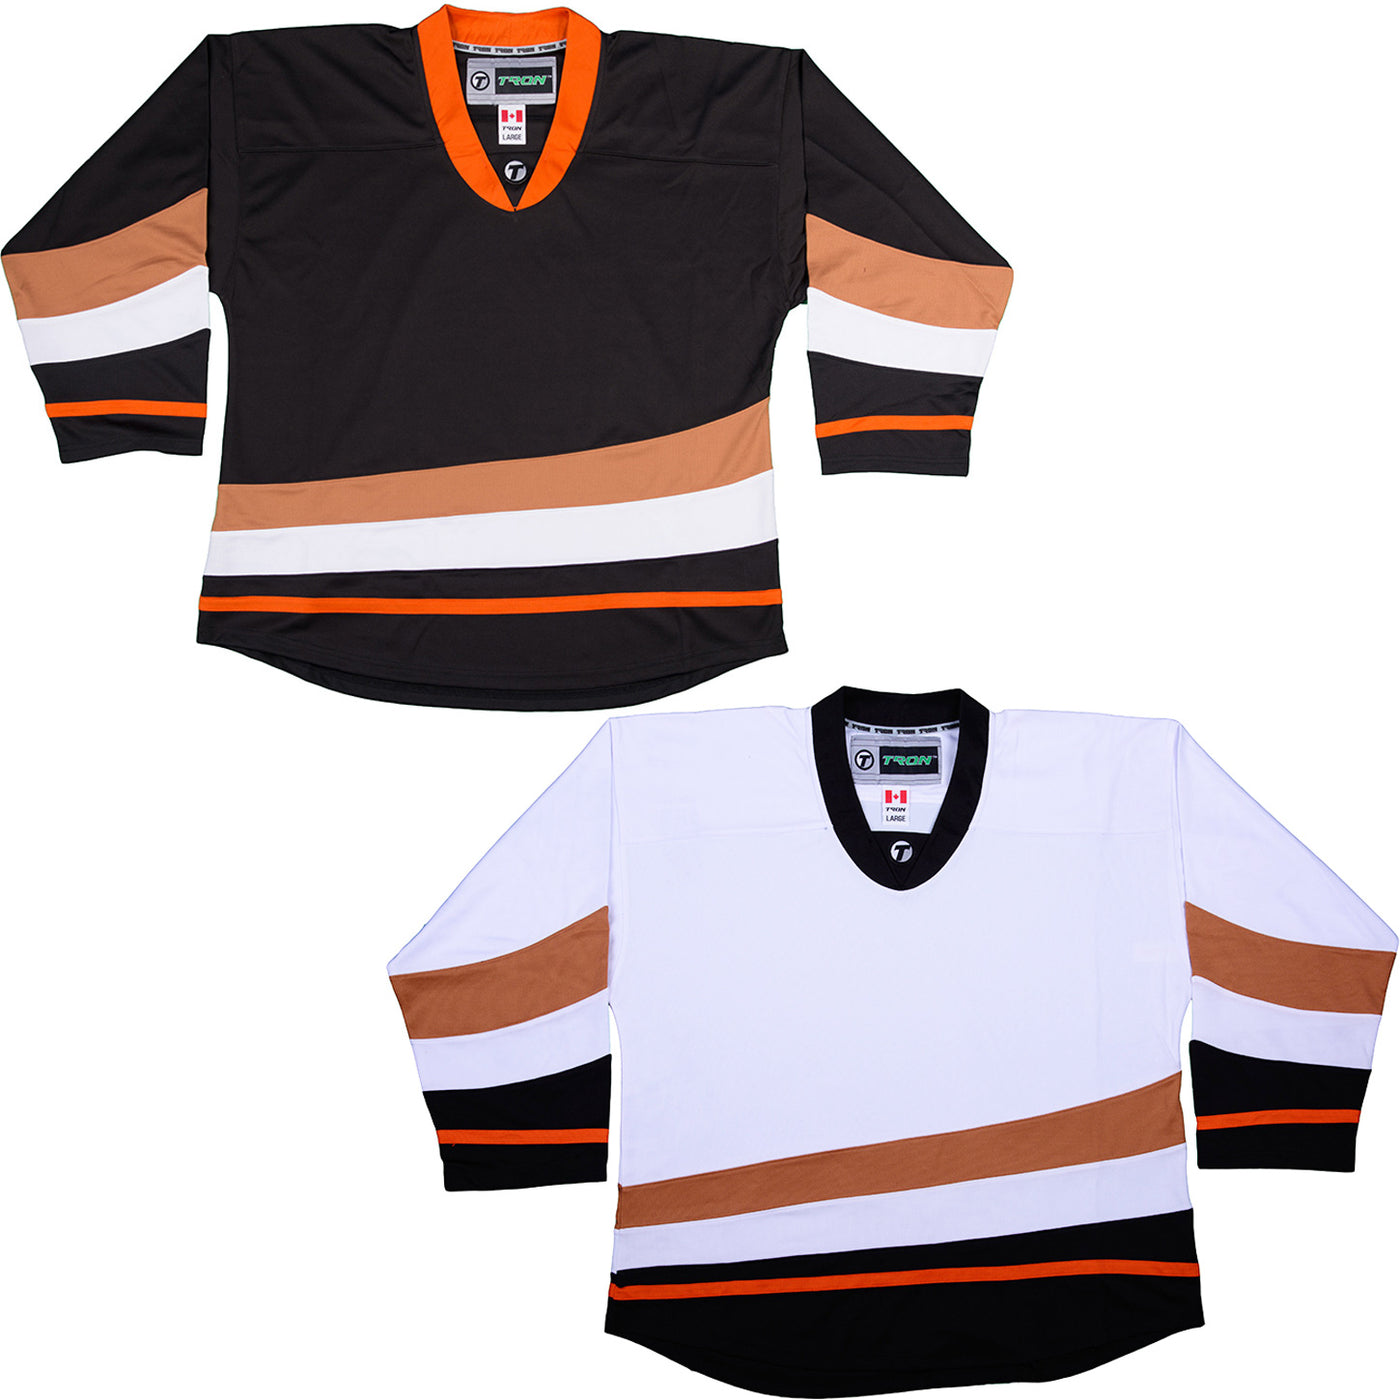 H6500-458 Teal/White/Orange League Style Blank Hockey Jerseys Youth Large